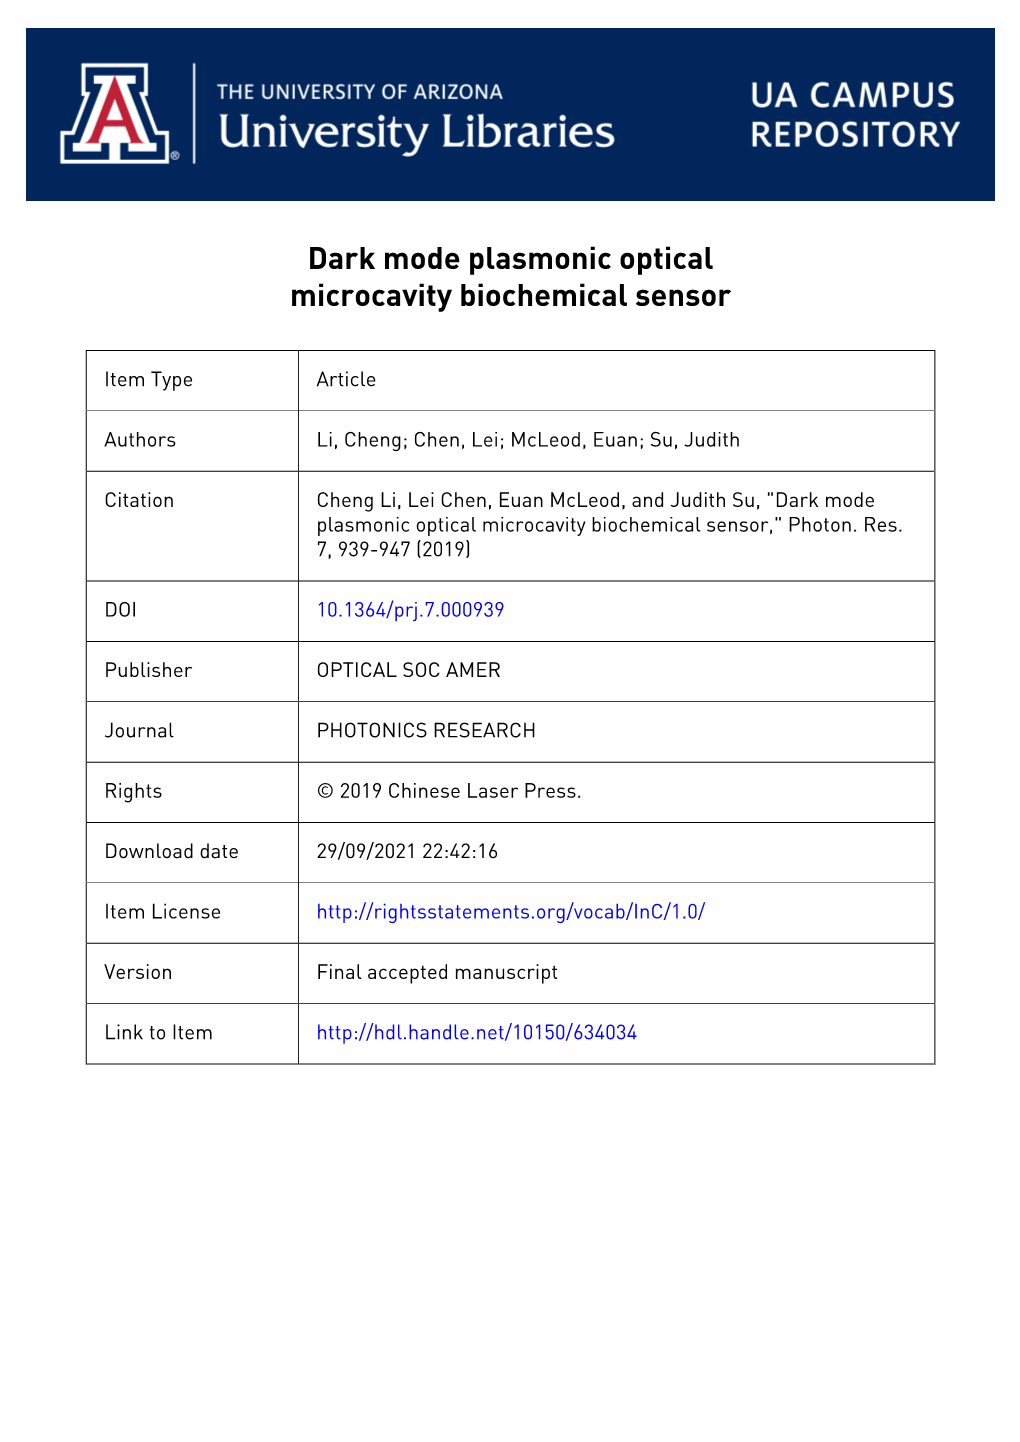 Dark Mode Plasmonic Optical Microcavity Biochemical Sensor